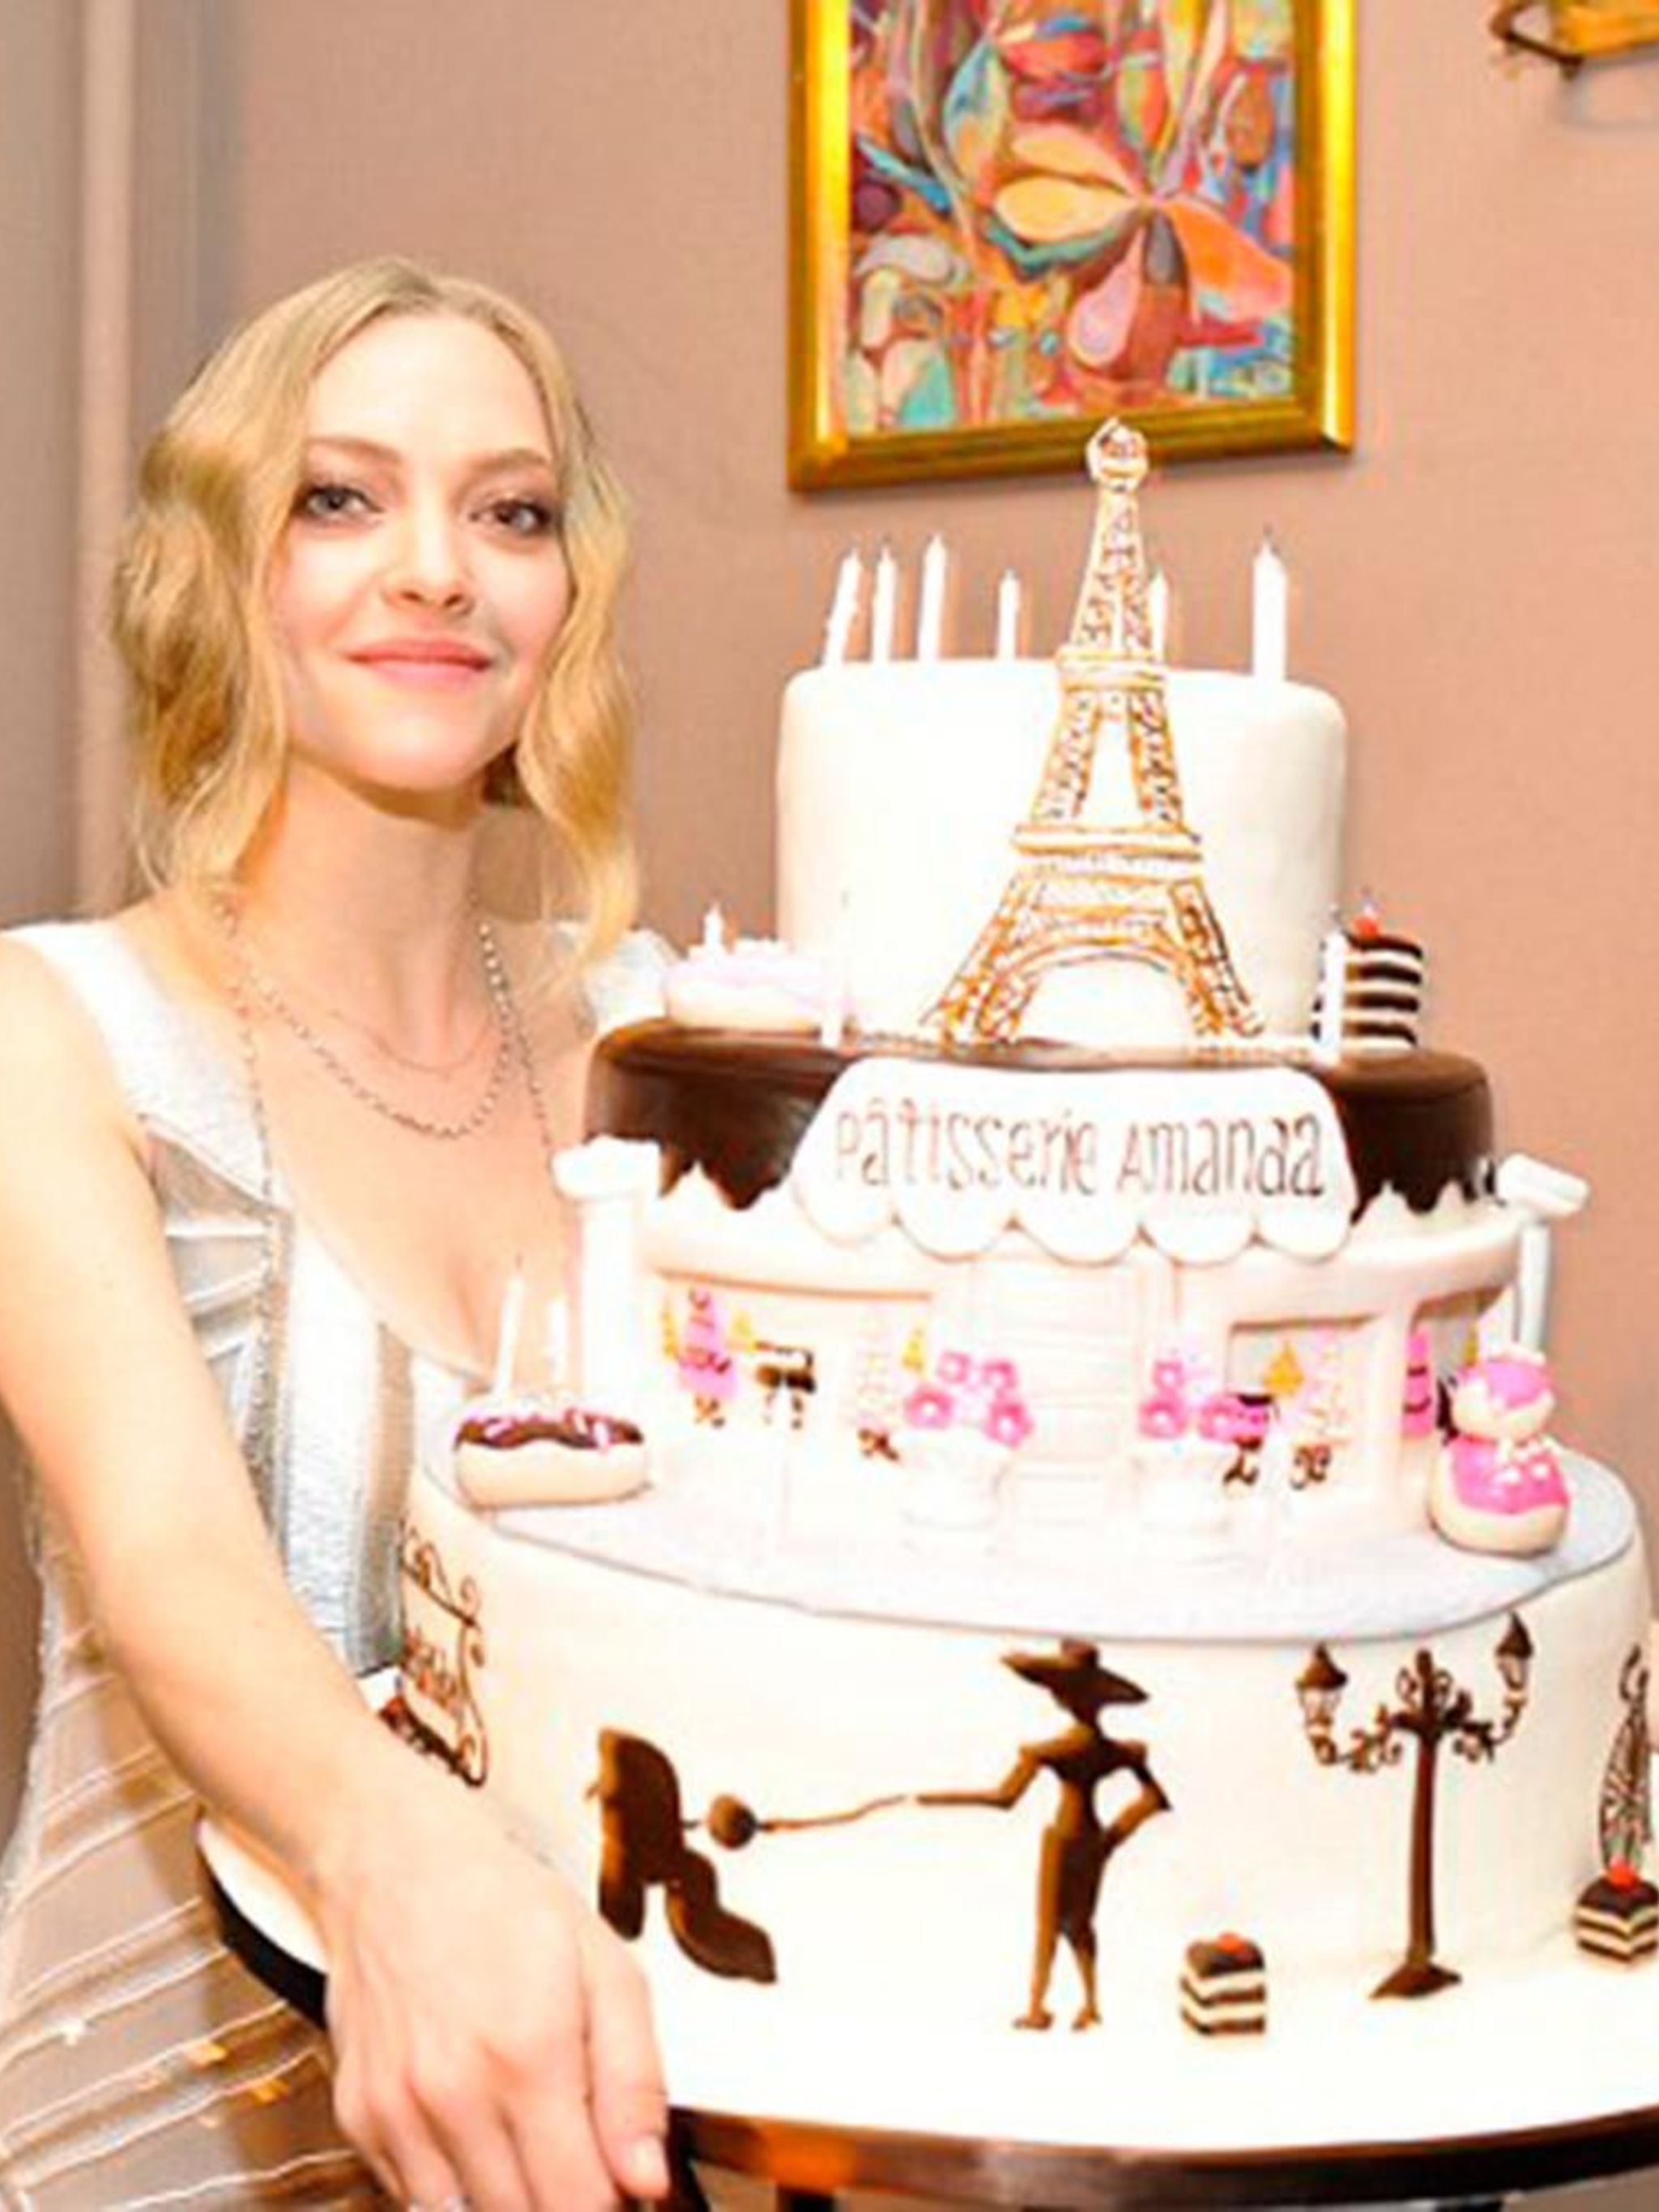 Best Celebrity Cakes: Birthday Edition